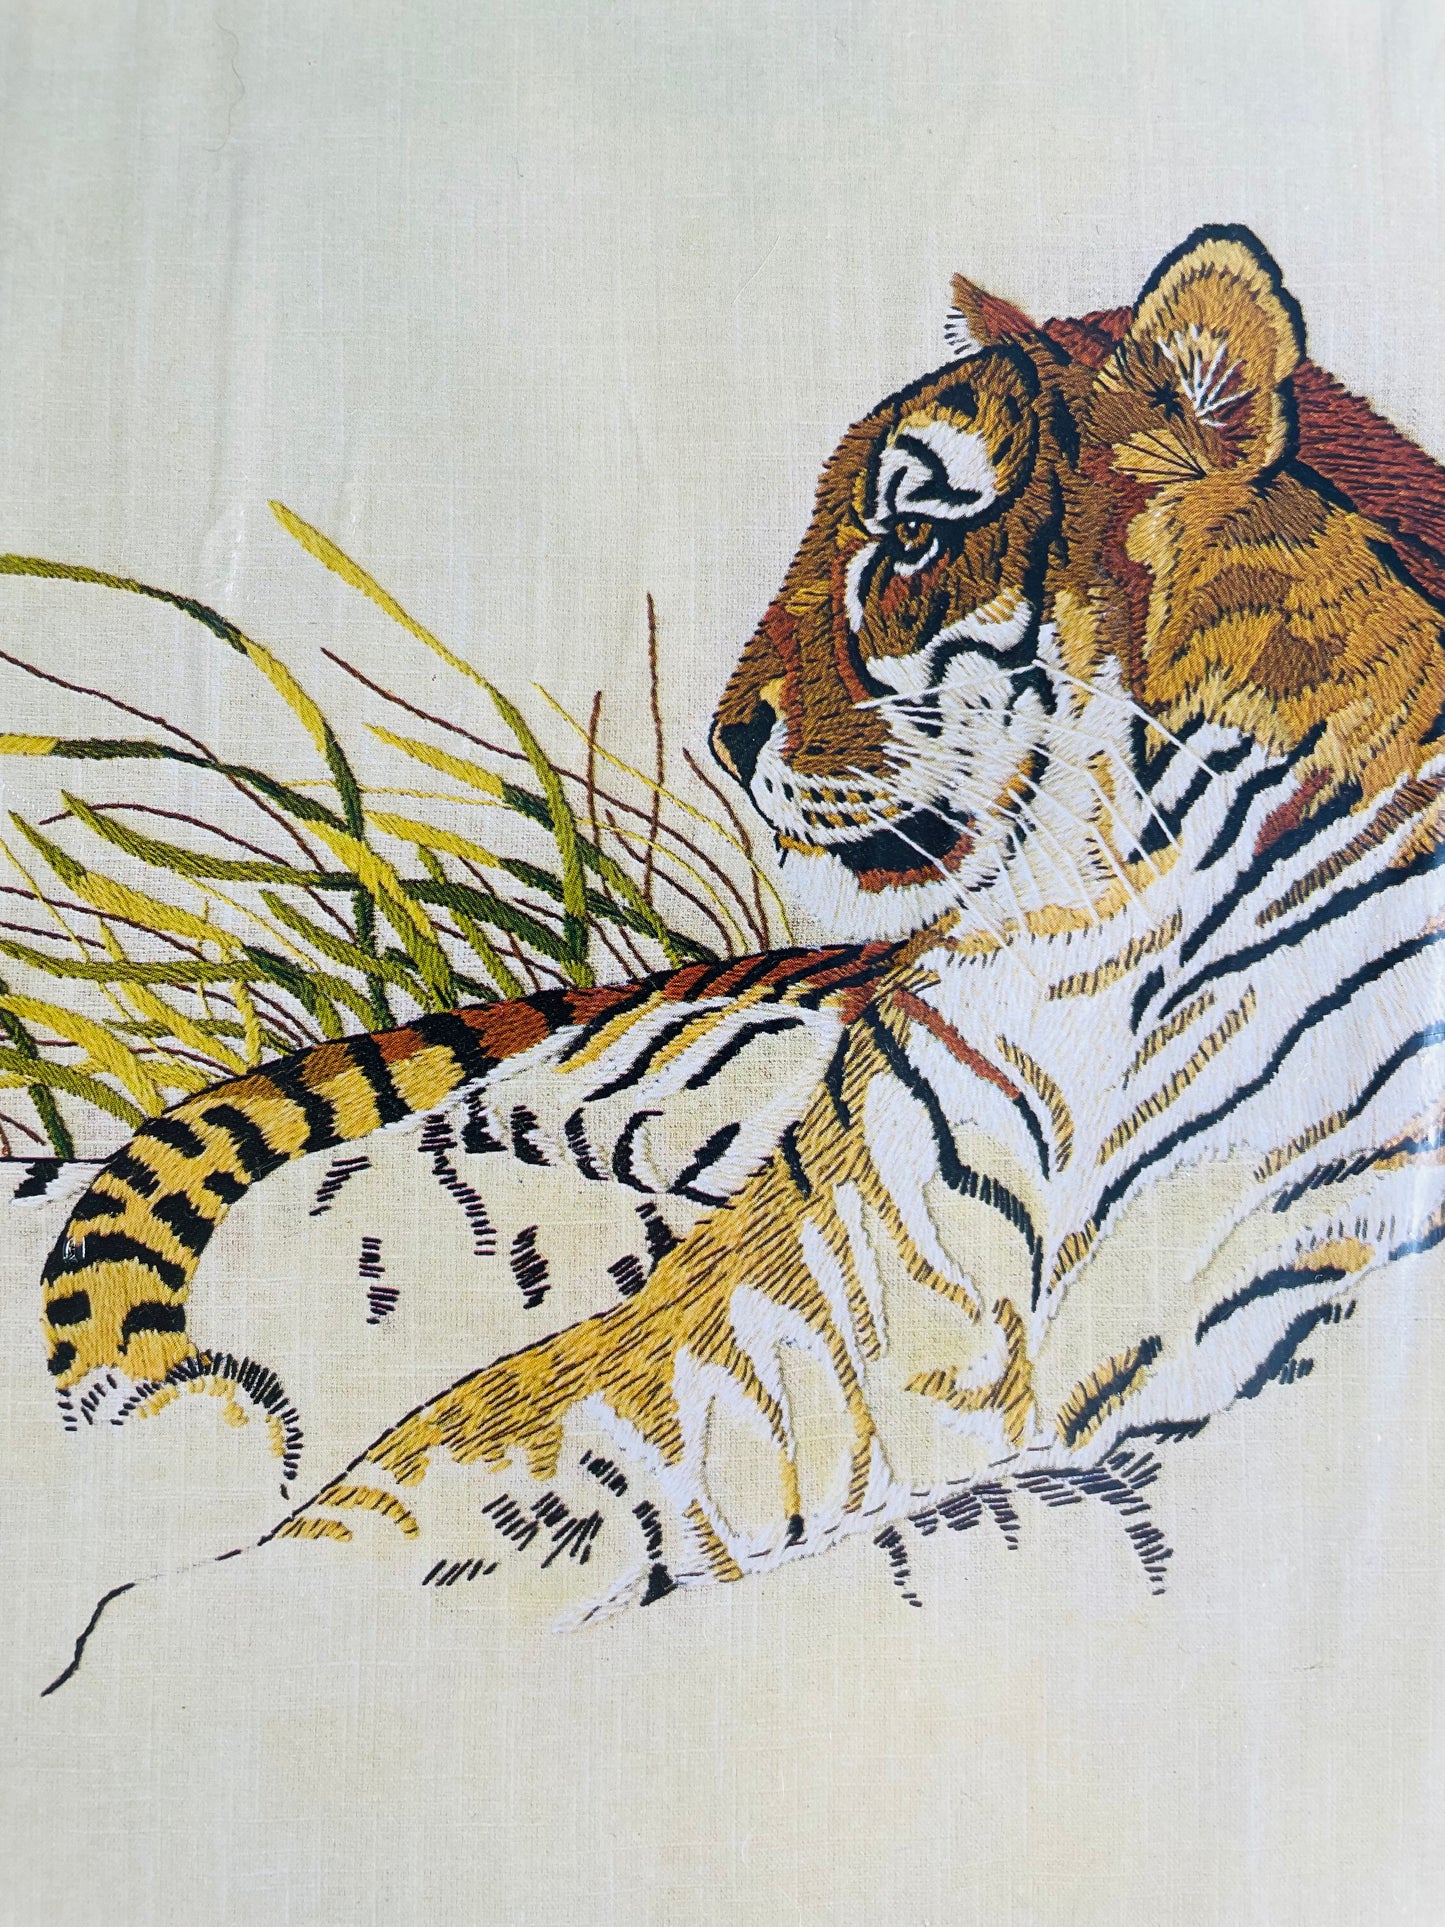 Bucilla Stitchery Needlework Embroidery Kit - Tiger's Haven